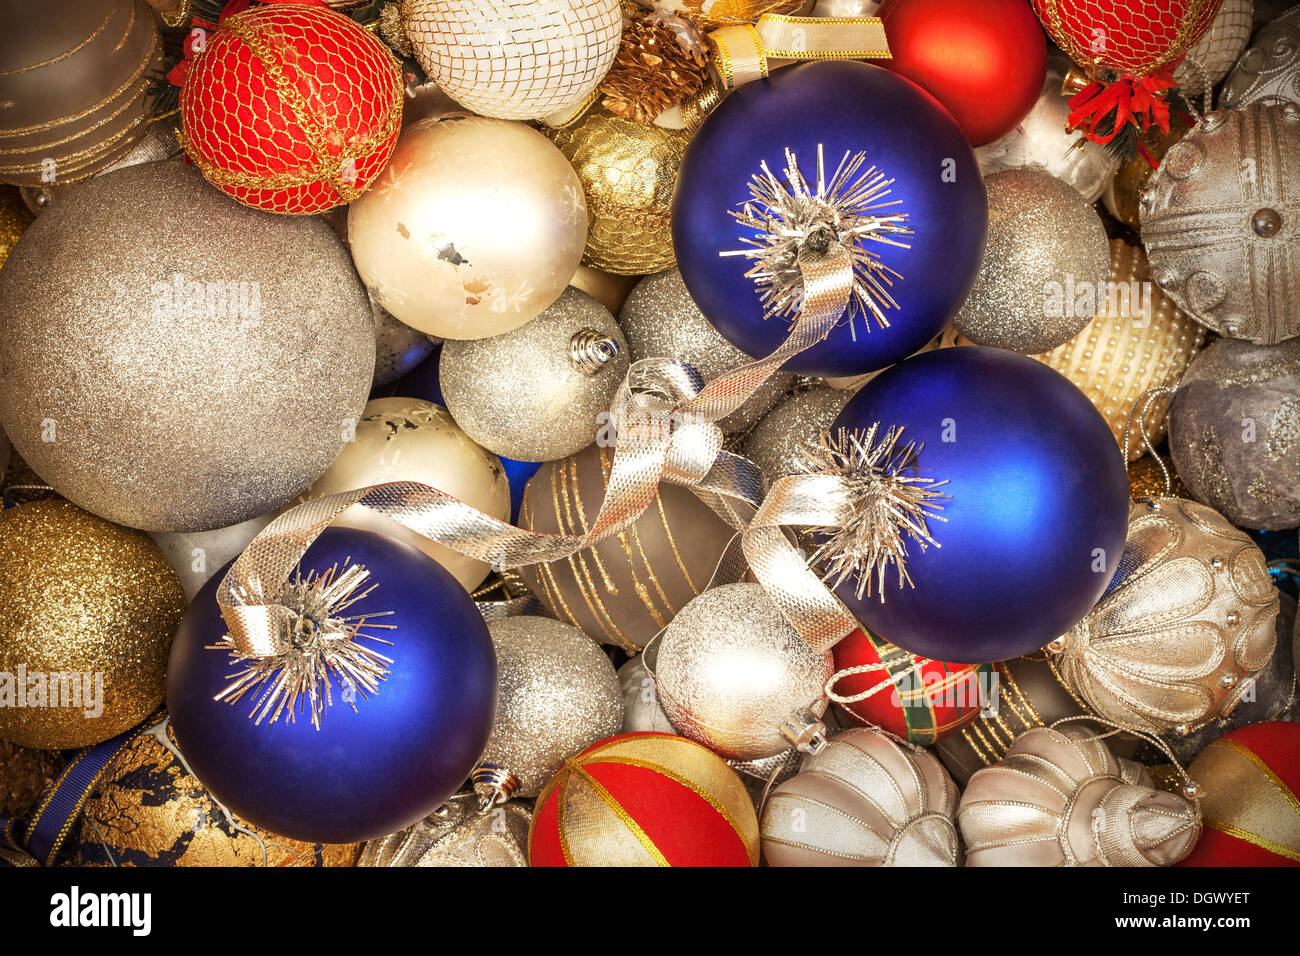 Mix of colorful Christmas balls Stock Photo